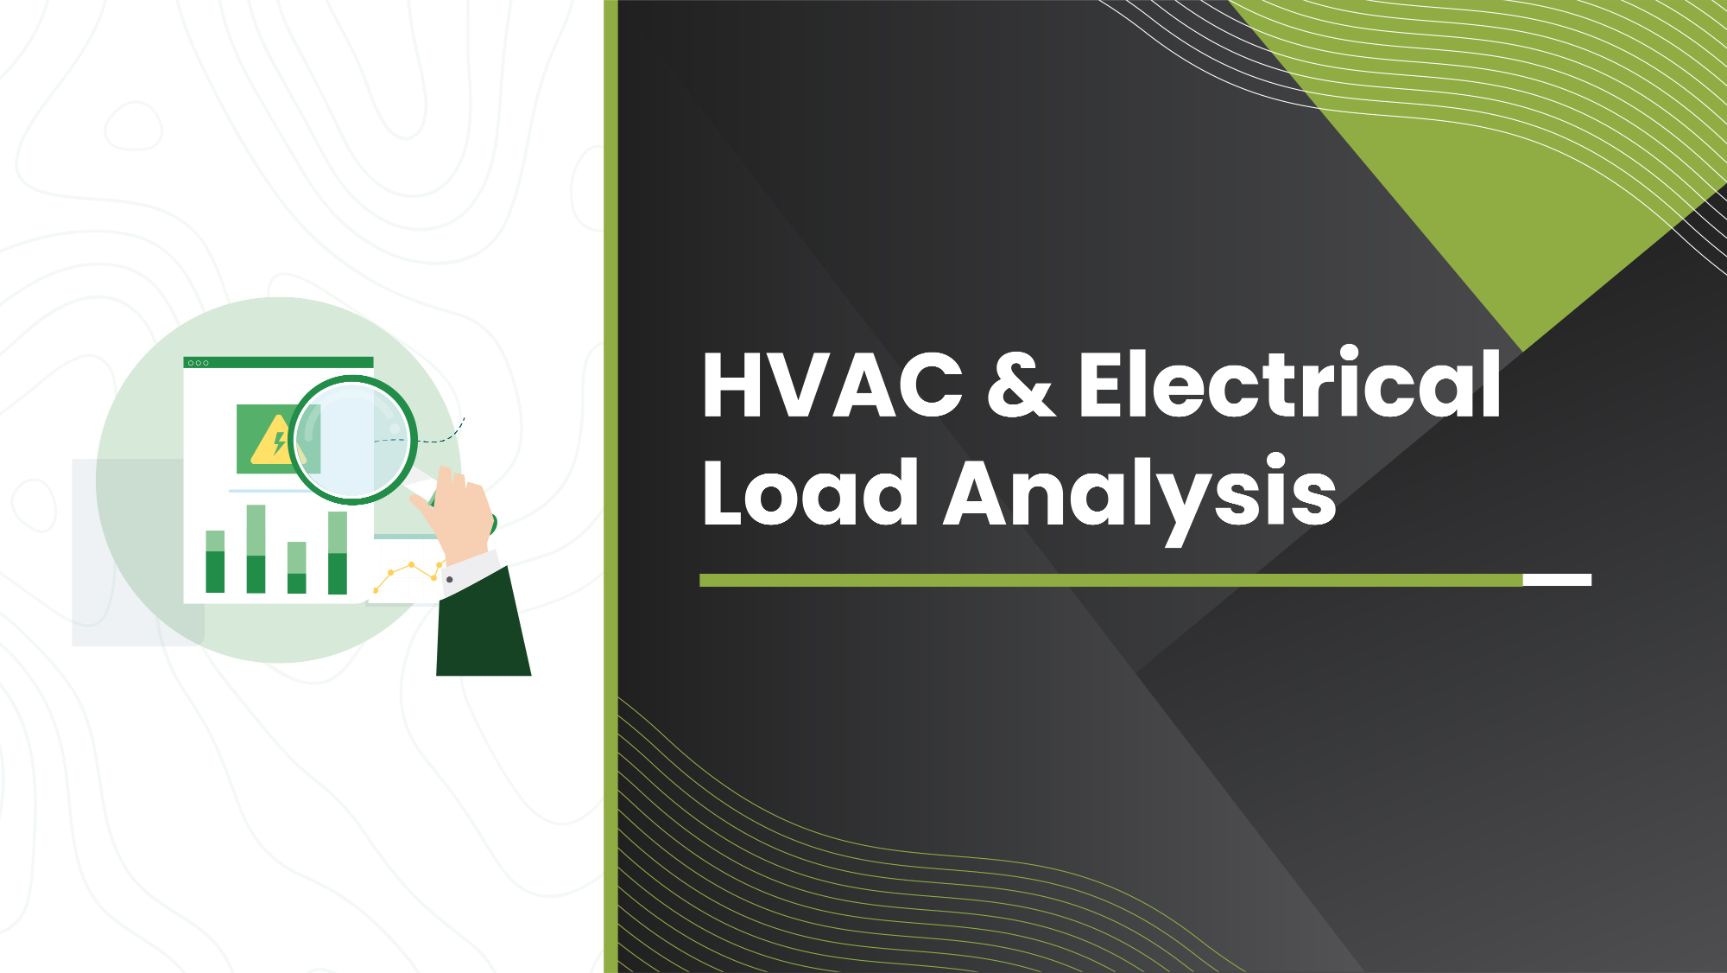 HVAC & Electrical Load Analysis